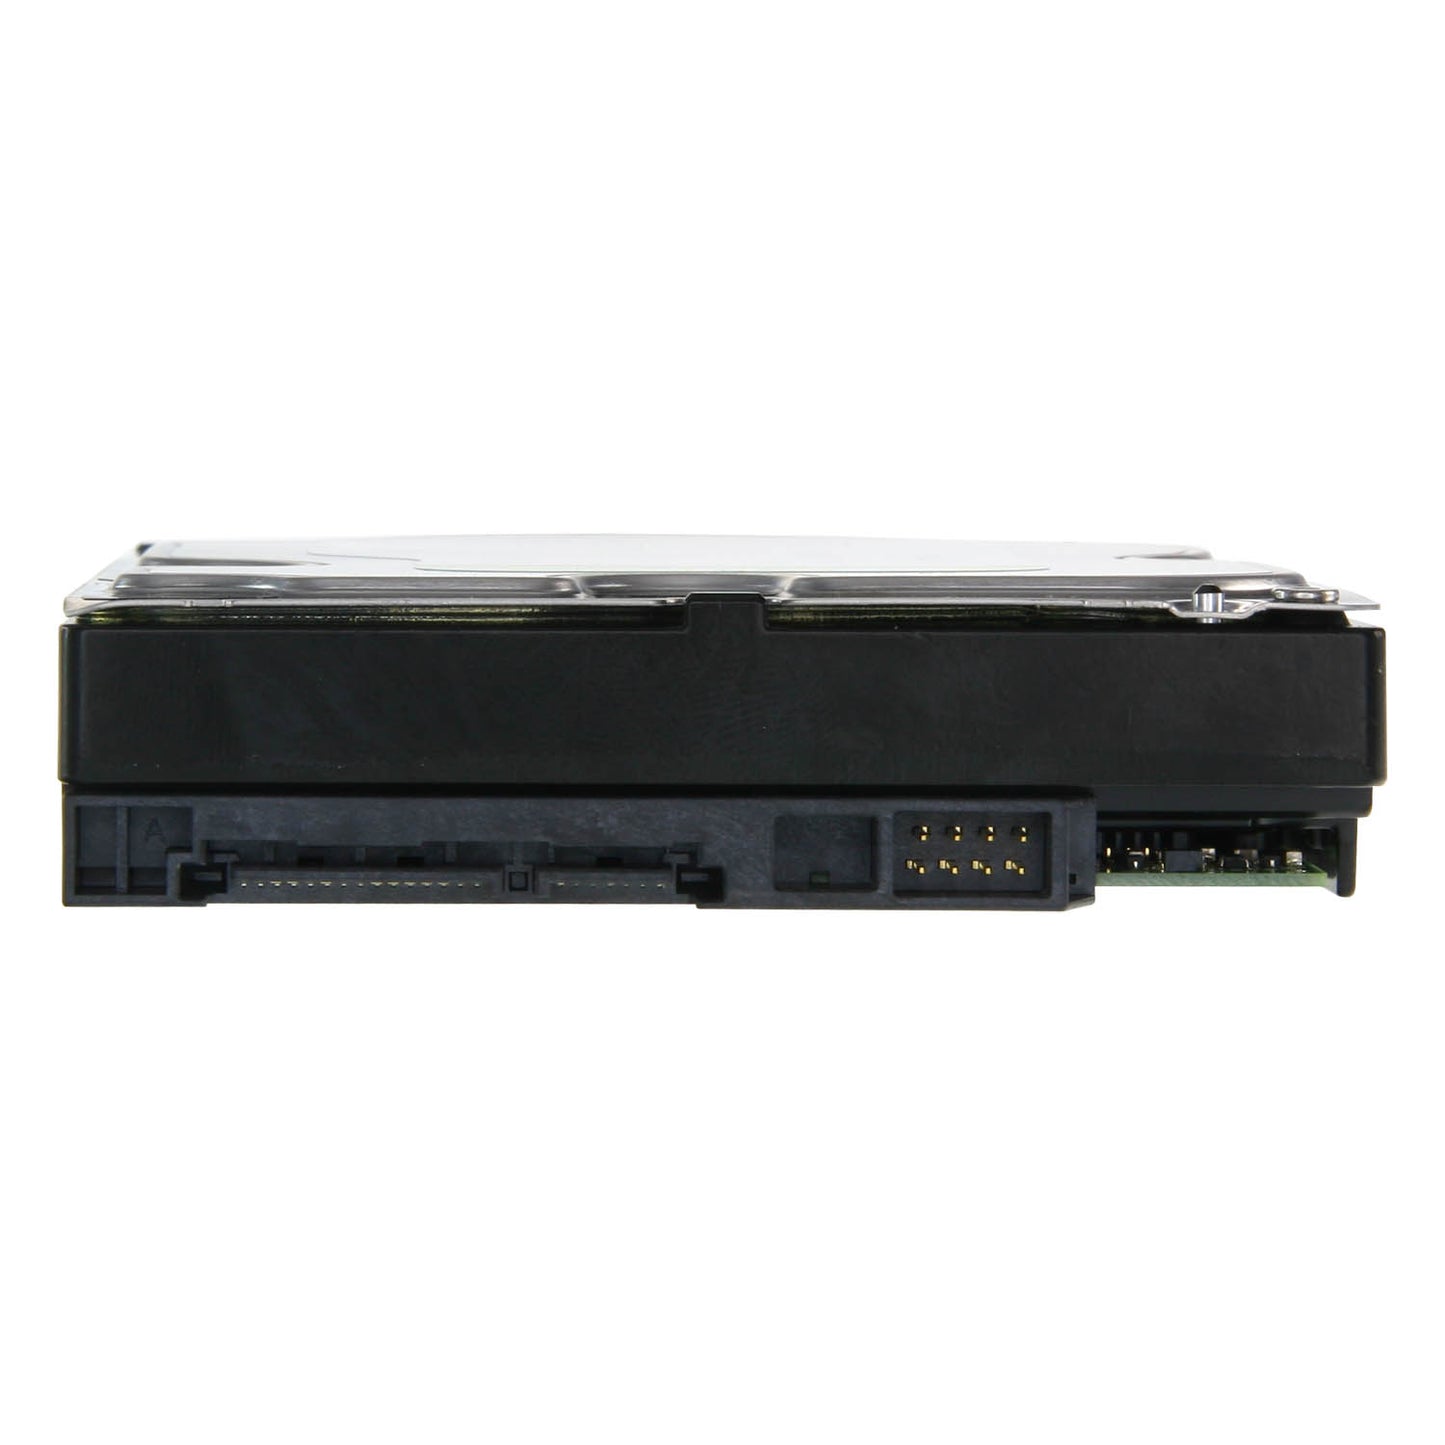 Disco Duro - Capacidad 4 TB - Interfaz SATA 6 GB/s - Modelo WD40PURX - Especial para videograbadores - Solo o instalado en DVR